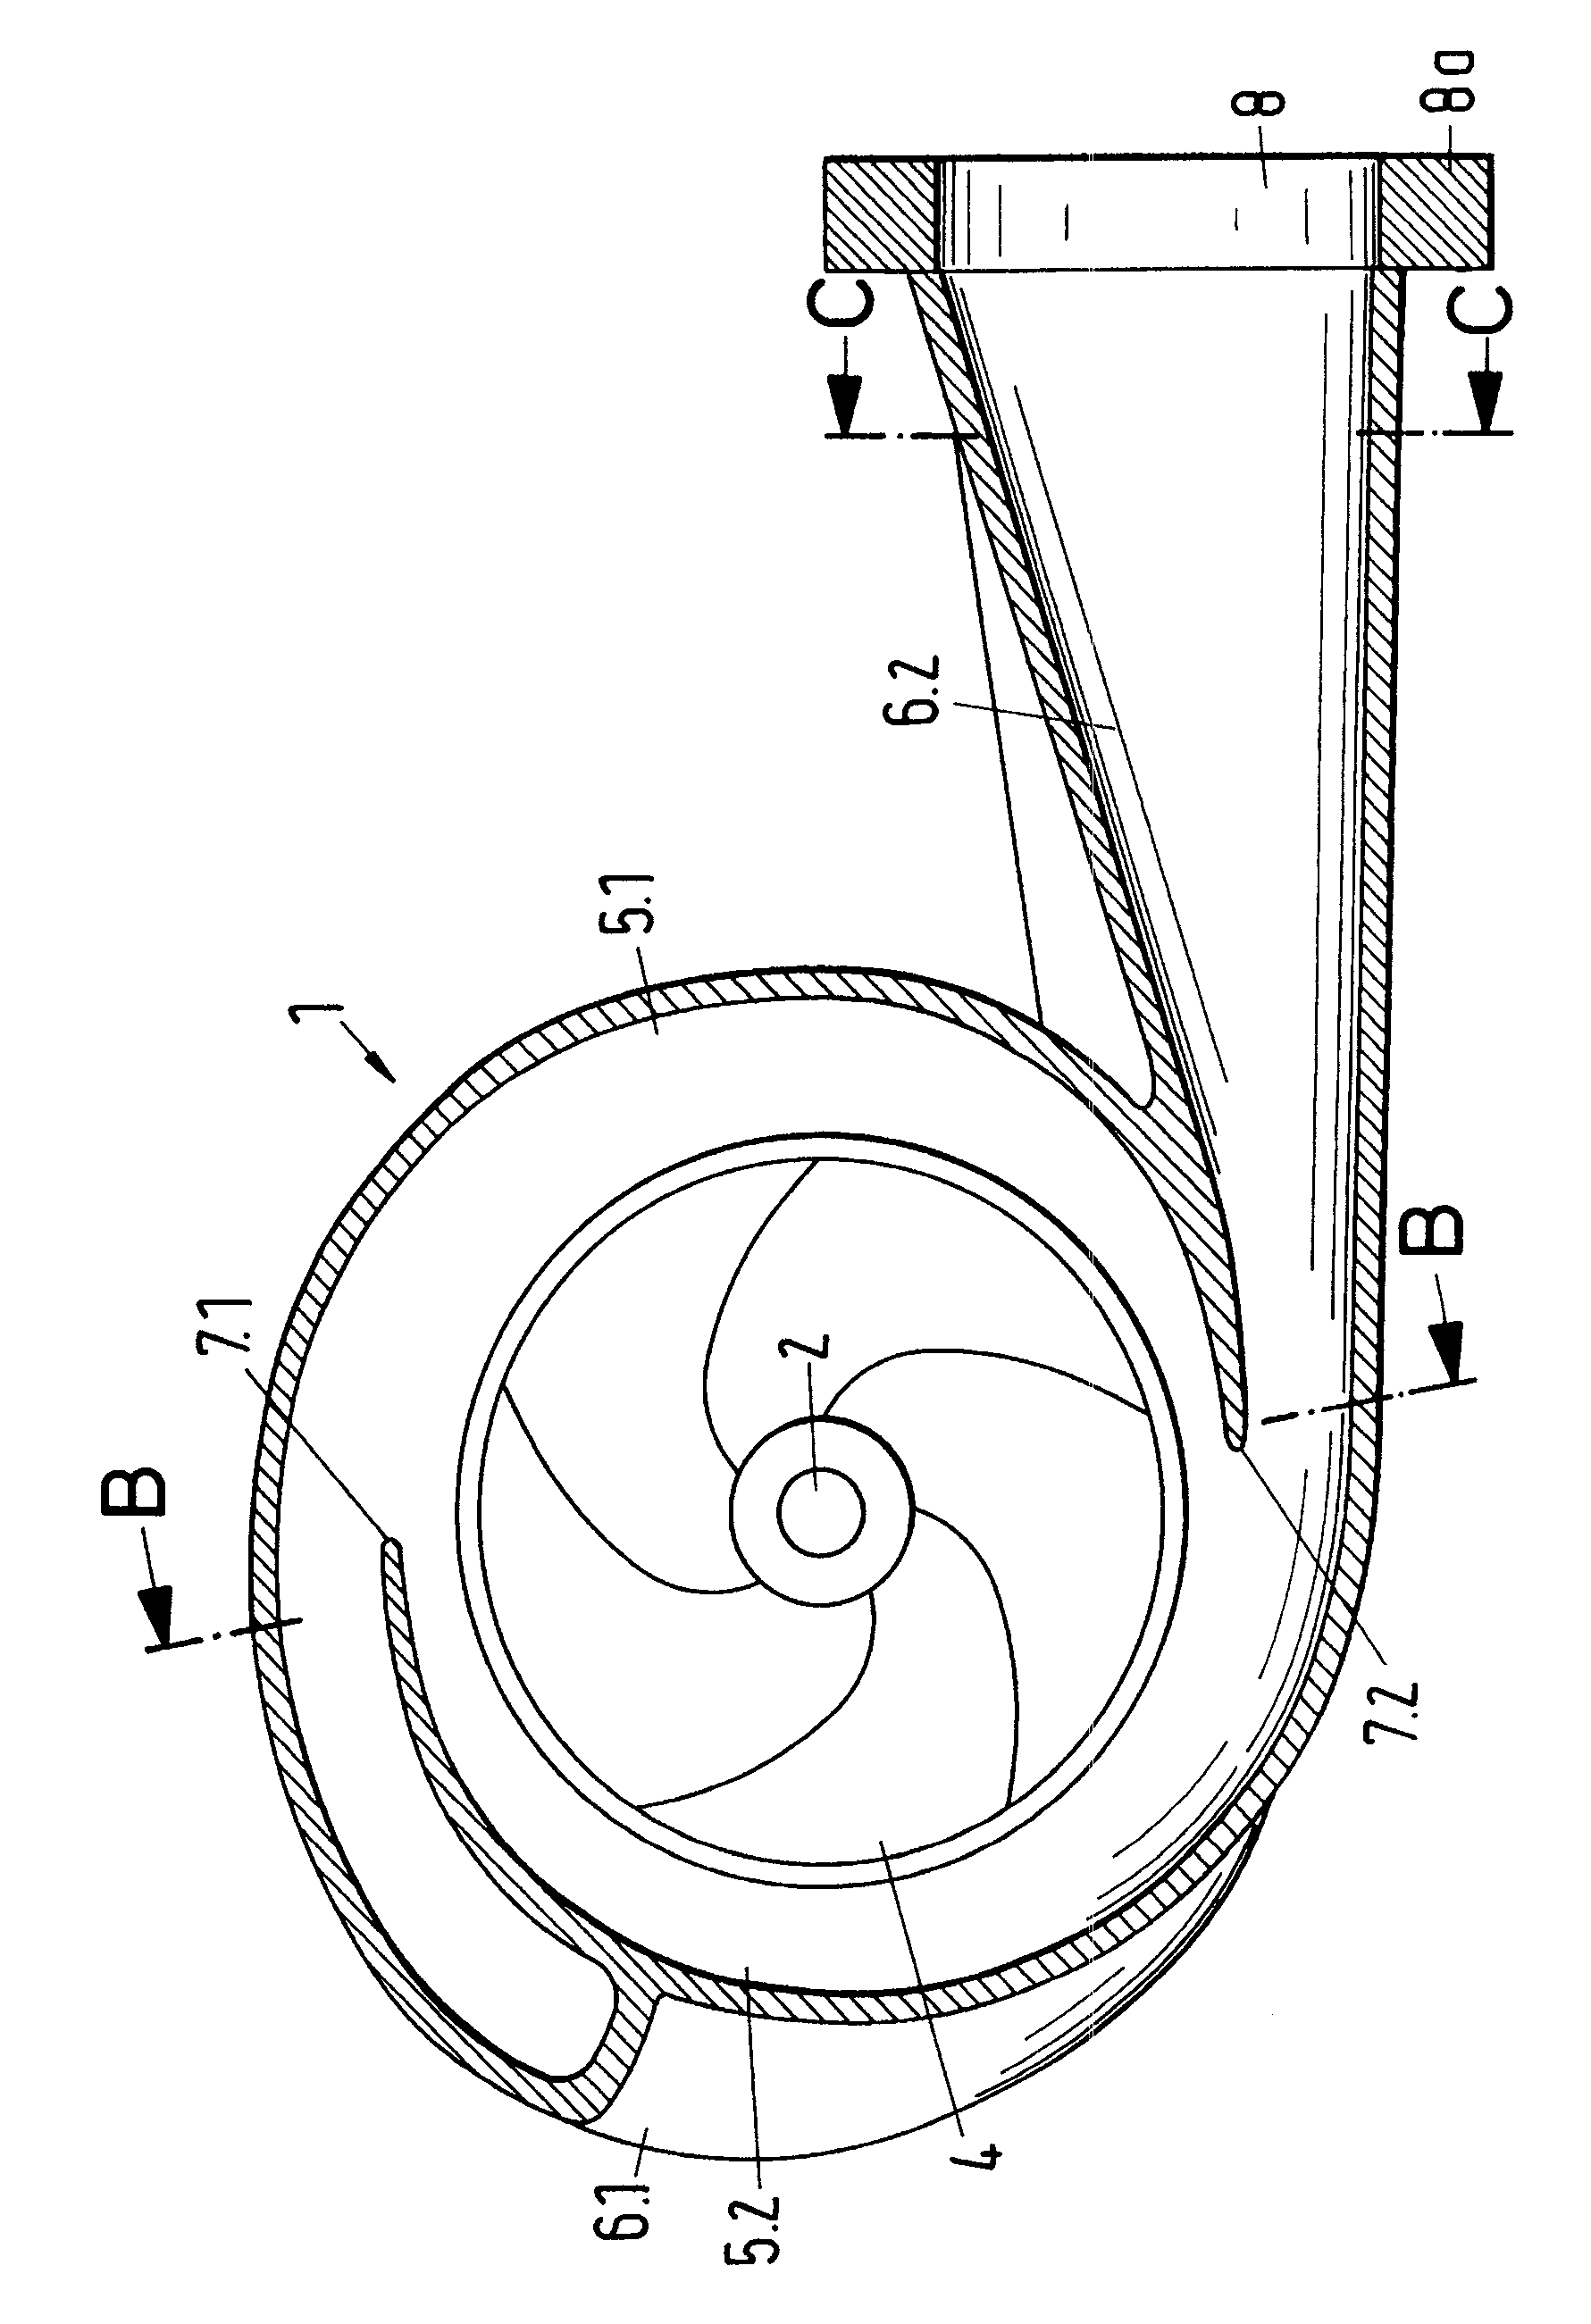 Volute shaped pump casing for a centrifugal pump